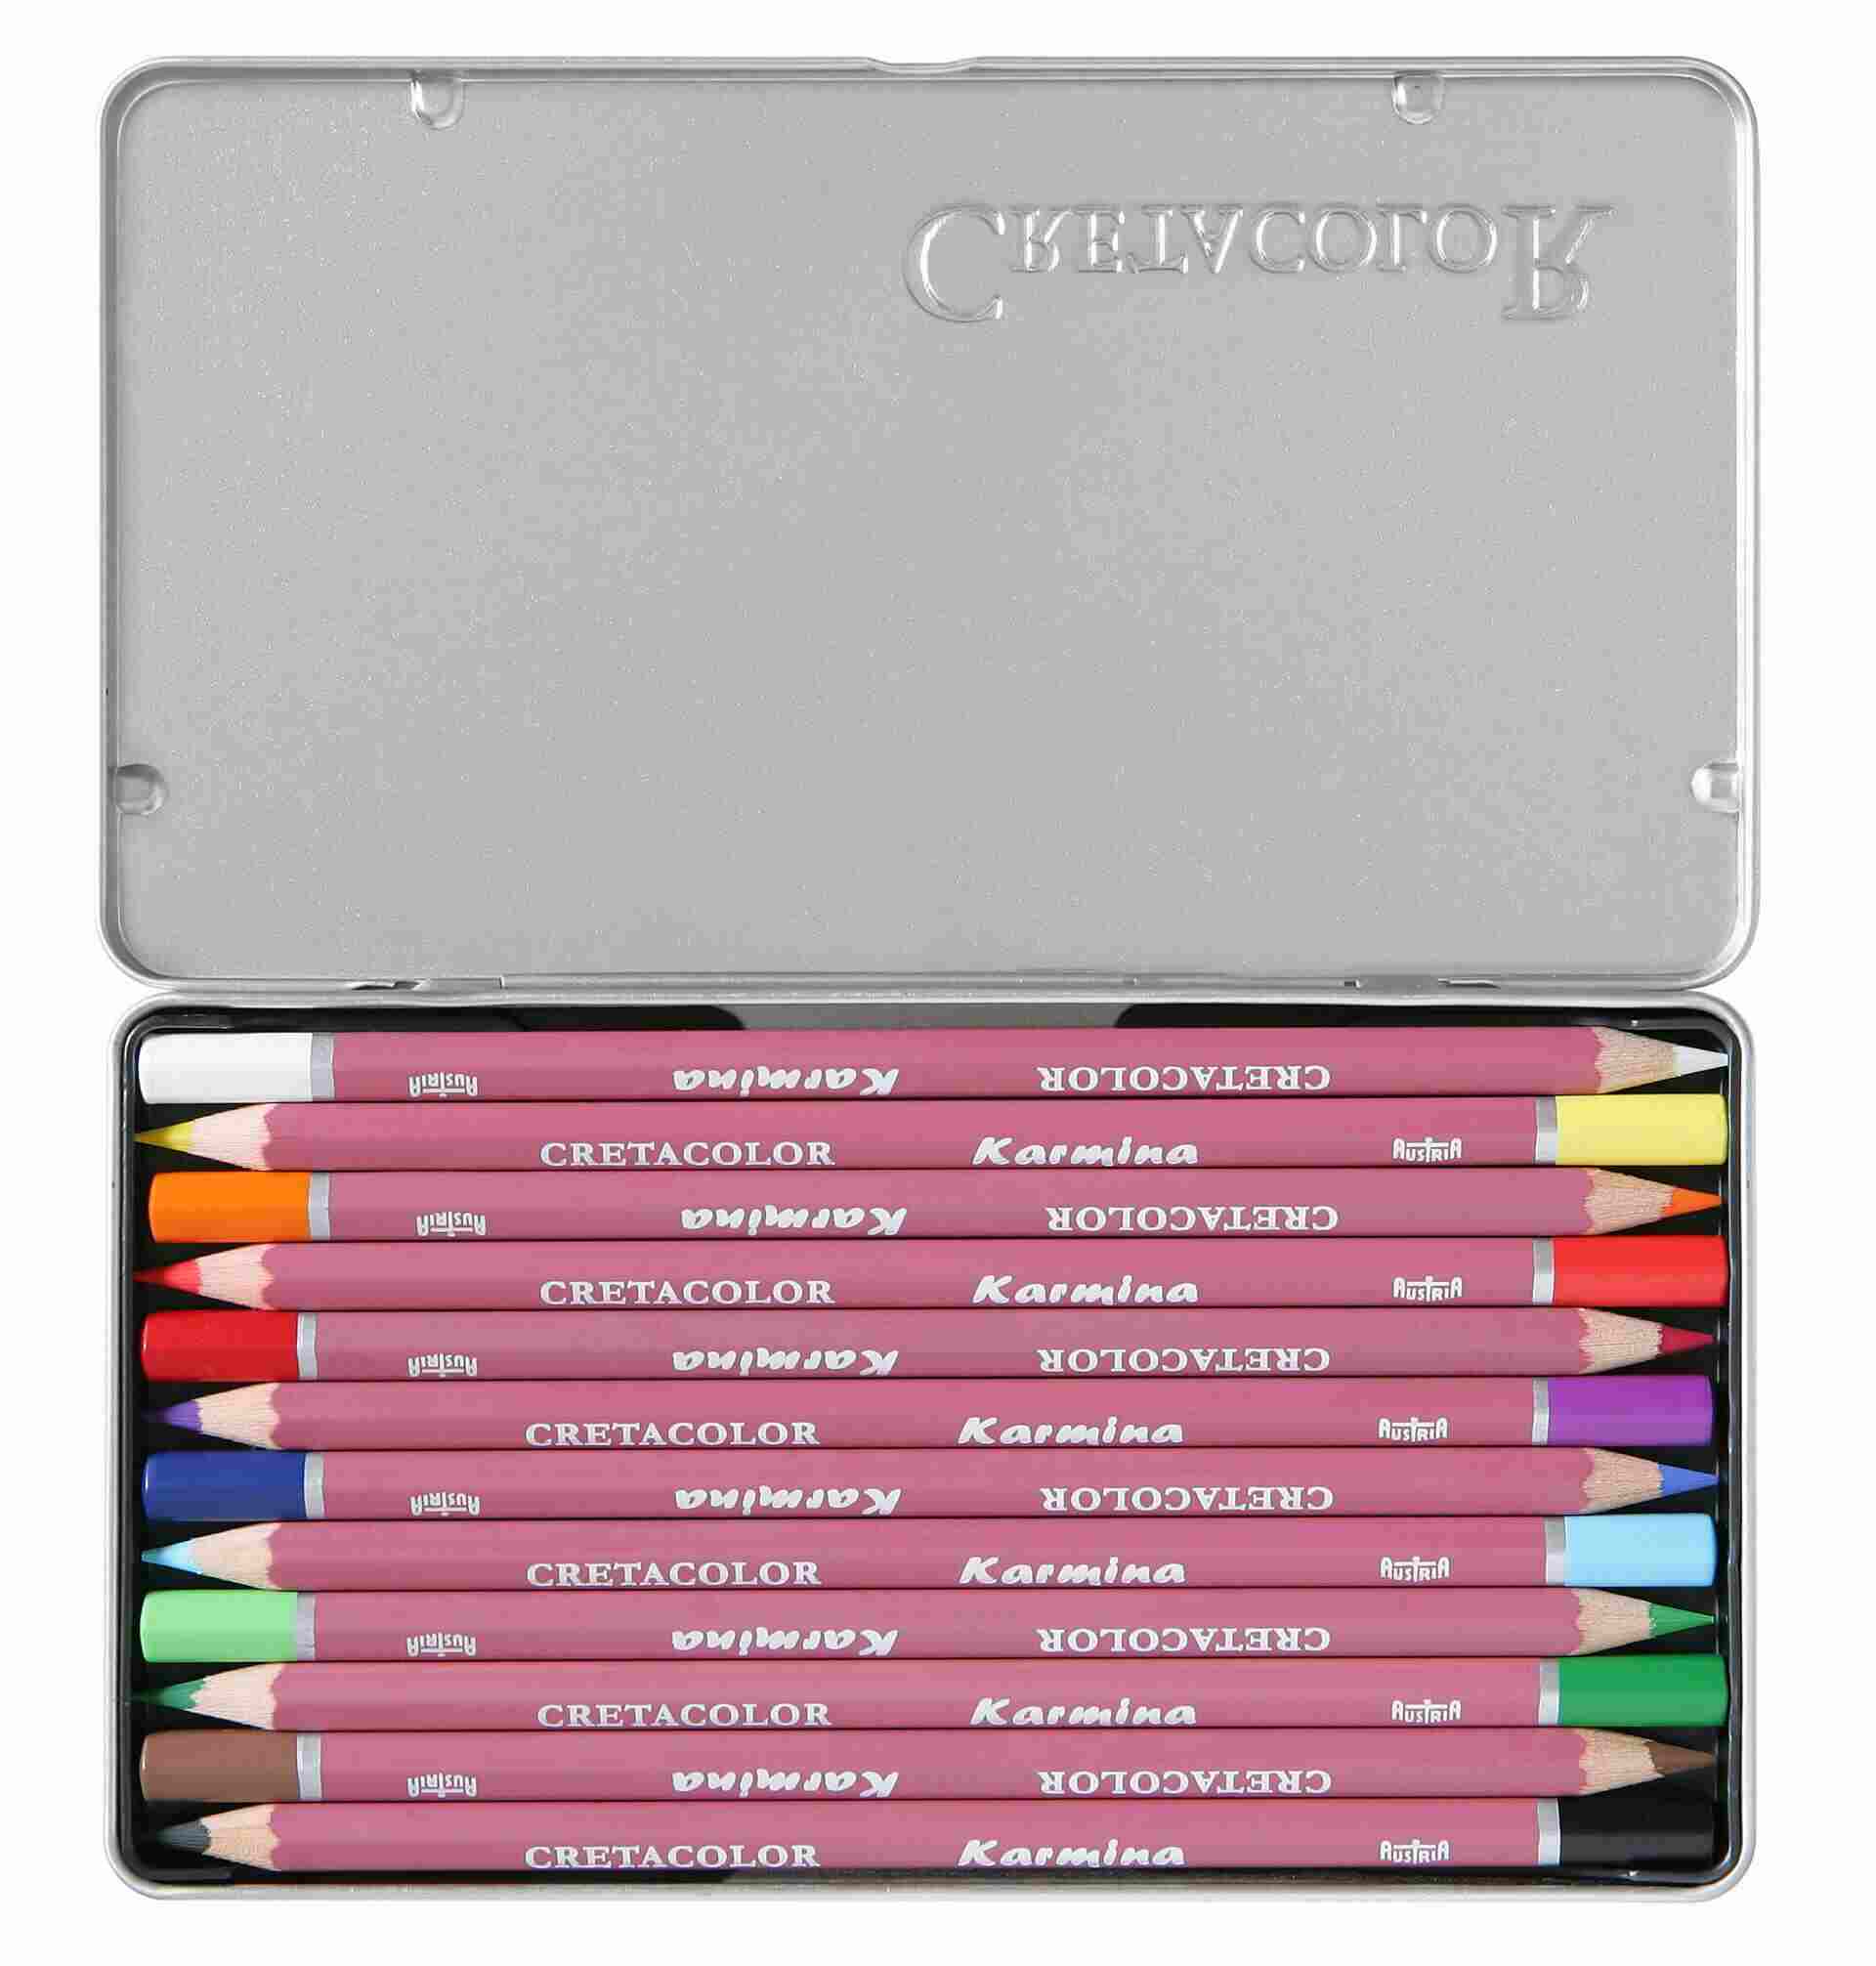 Cretacolor Karmina Waterproof Artist’s Colored Pencils Set